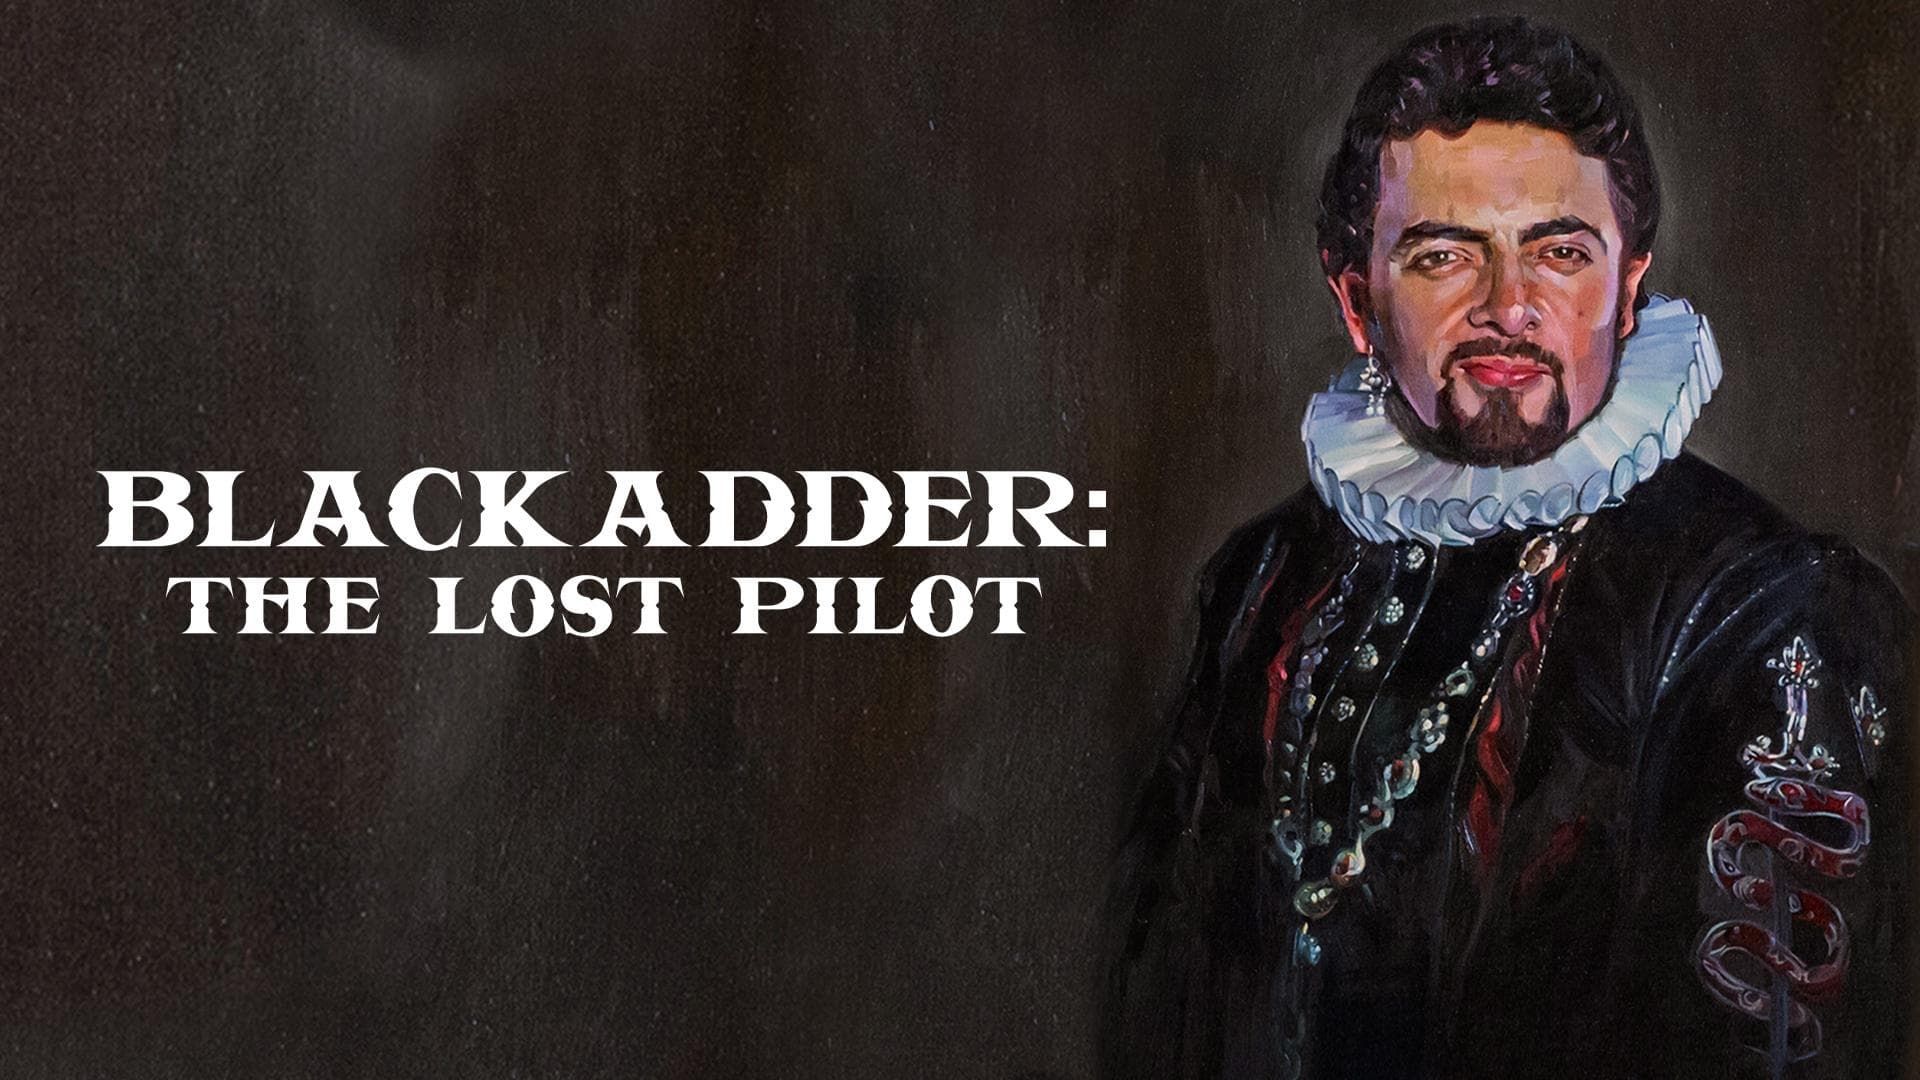 Blackadder: The Lost Pilot background